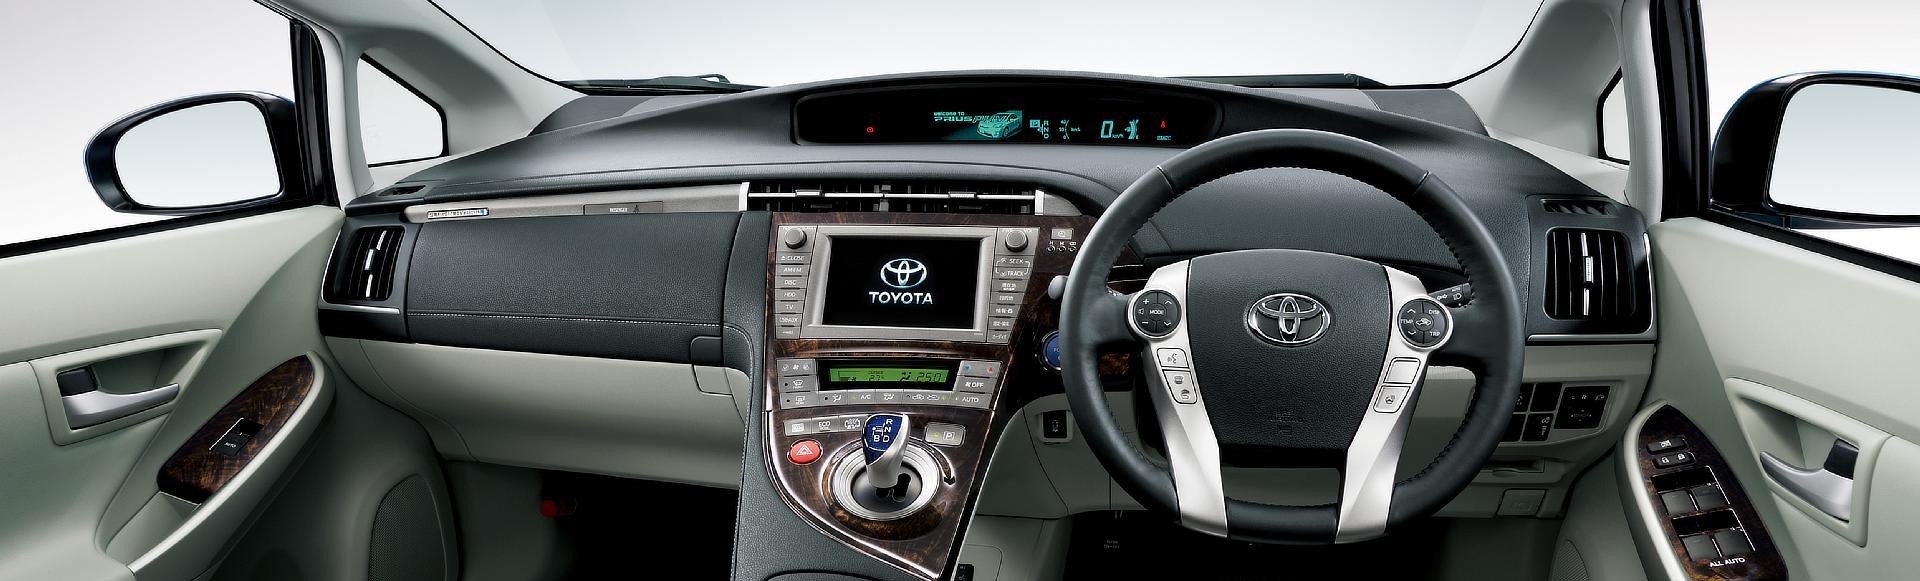 Toyota プリウスphvを一部改良 トヨタ グローバルニュースルーム トヨタ自動車株式会社 公式企業サイト